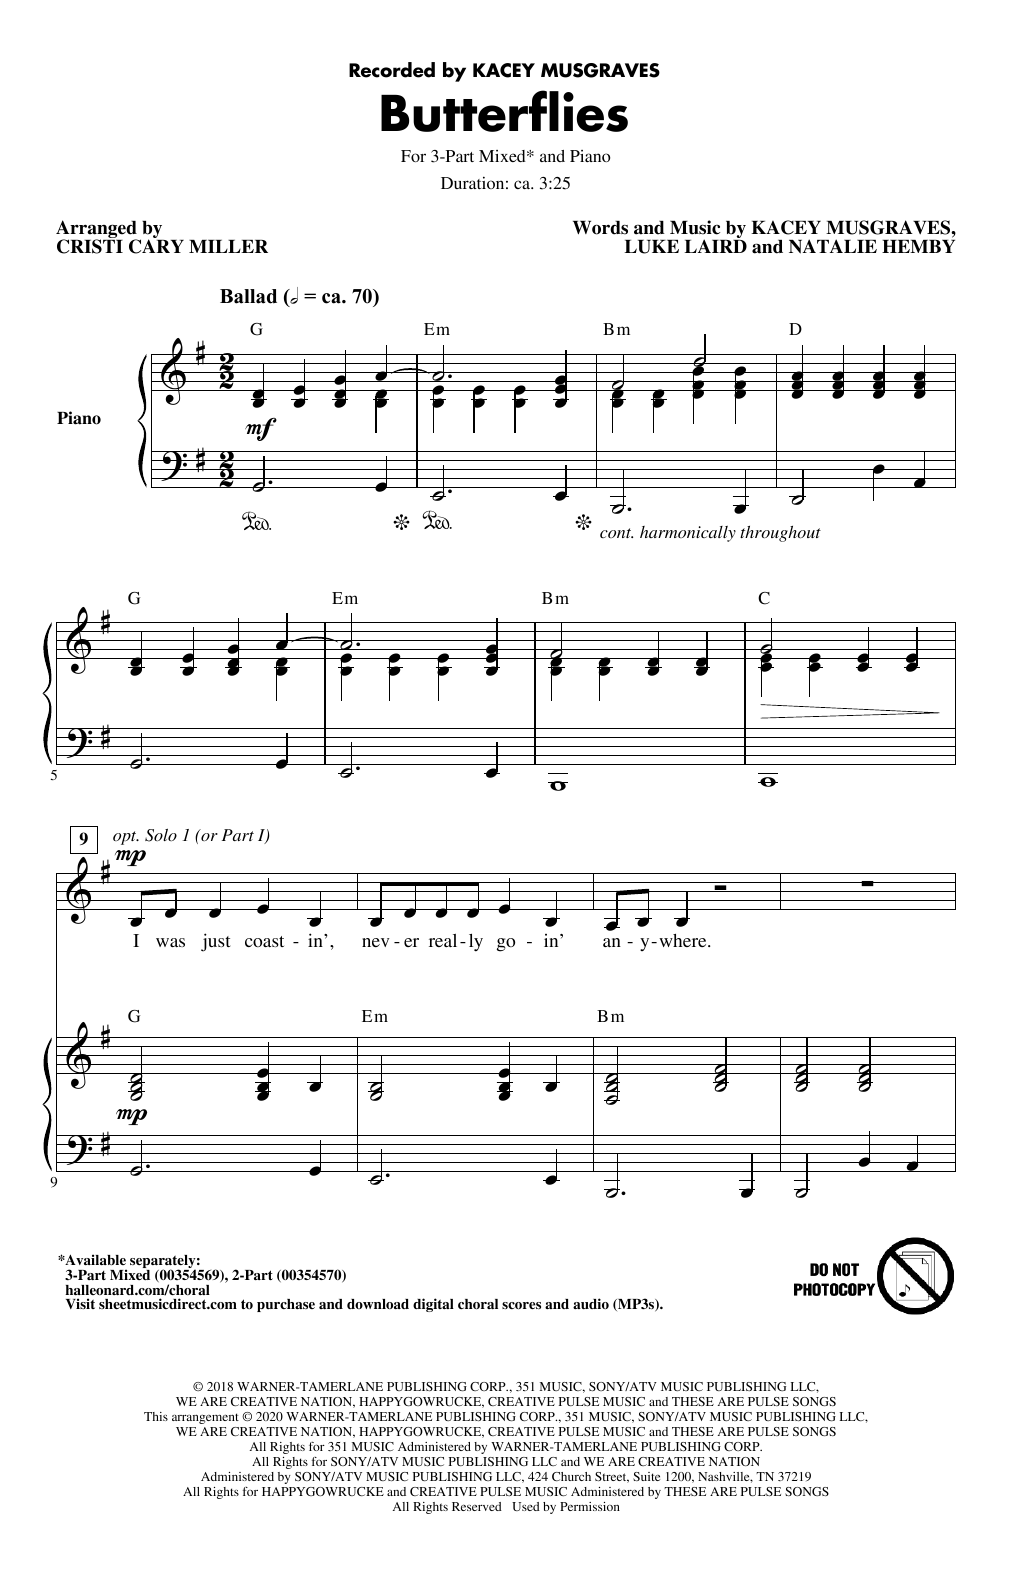 Kacey Musgraves Butterflies (arr. Cristi Cary Miller) sheet music notes and chords arranged for 2-Part Choir